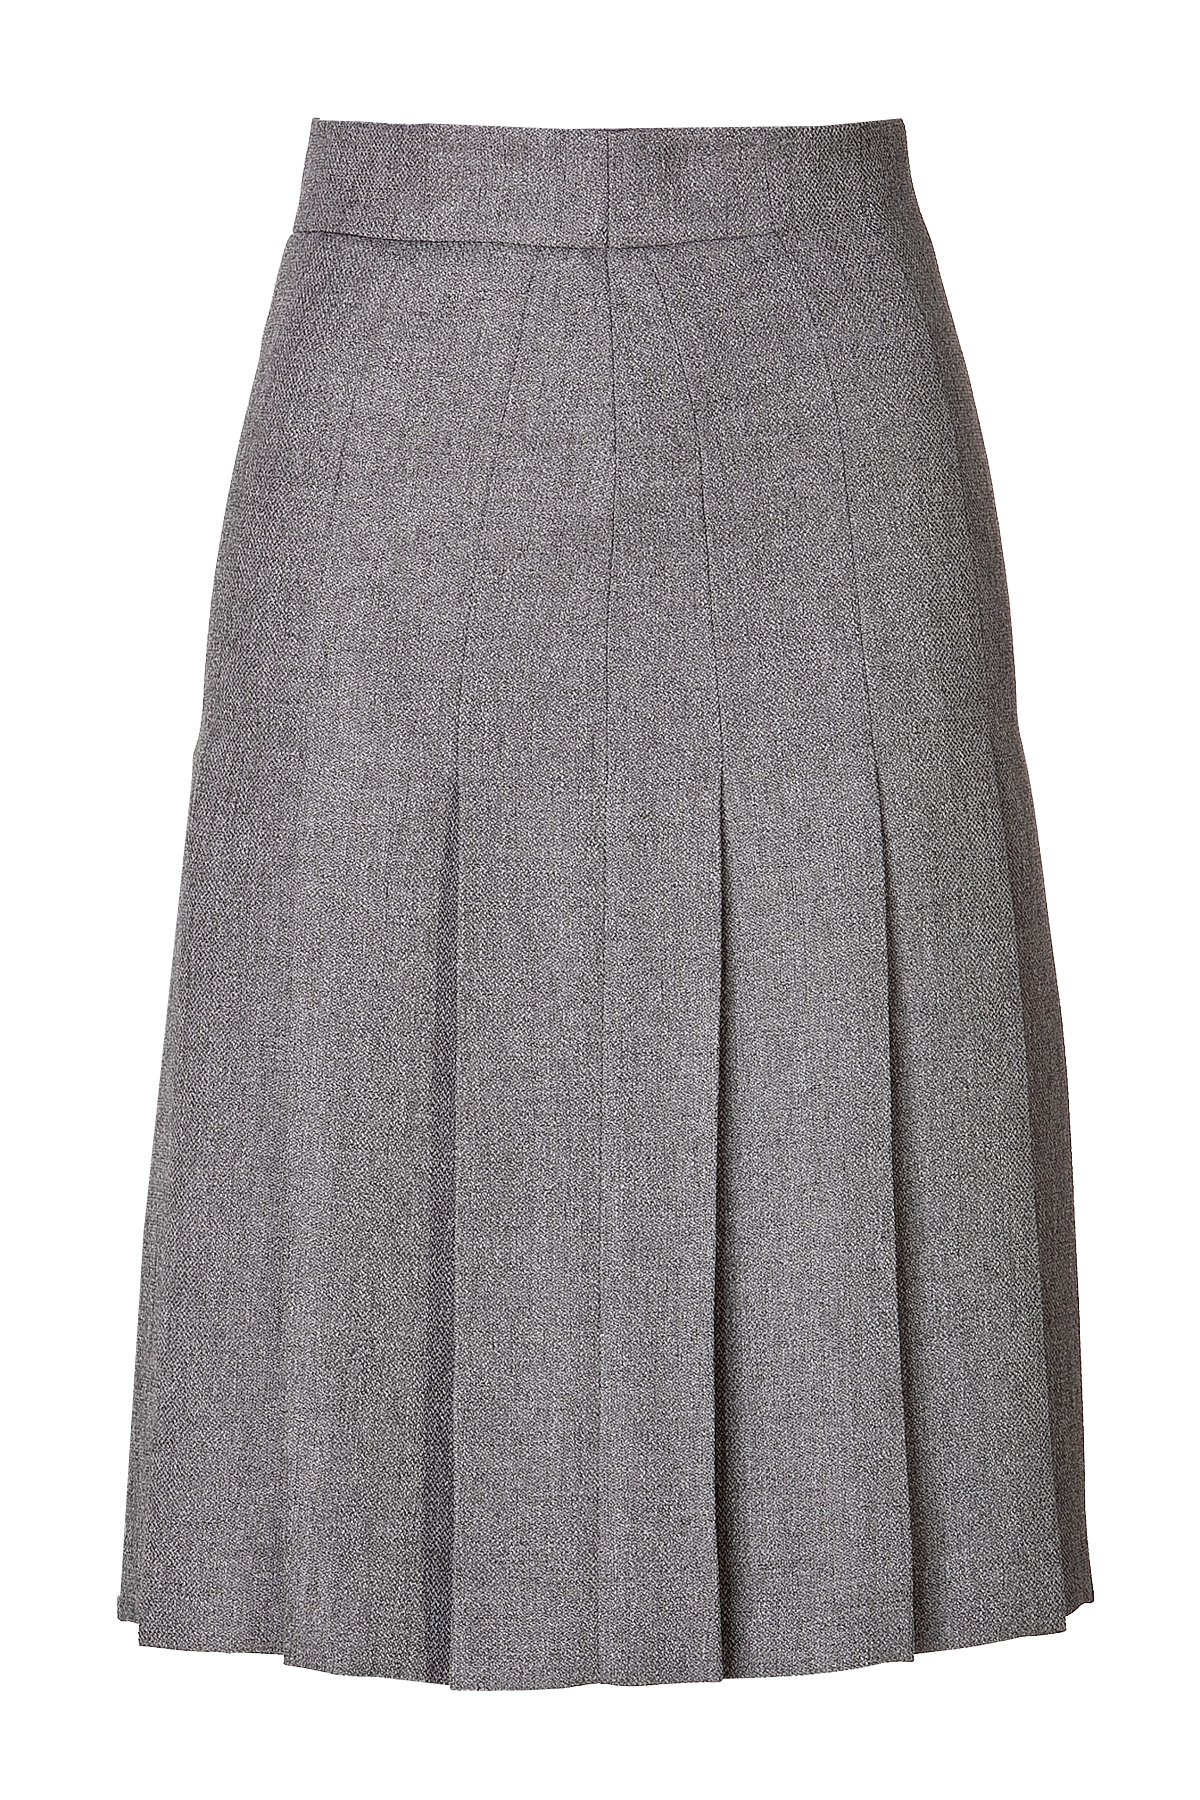 Monet Ved af Plus Size Gray Wool Blend pleated skirt , Custom Fit, Fully Lined,  Handmade, Wool Blend Fabric – Elizabeth's Custom Skirts